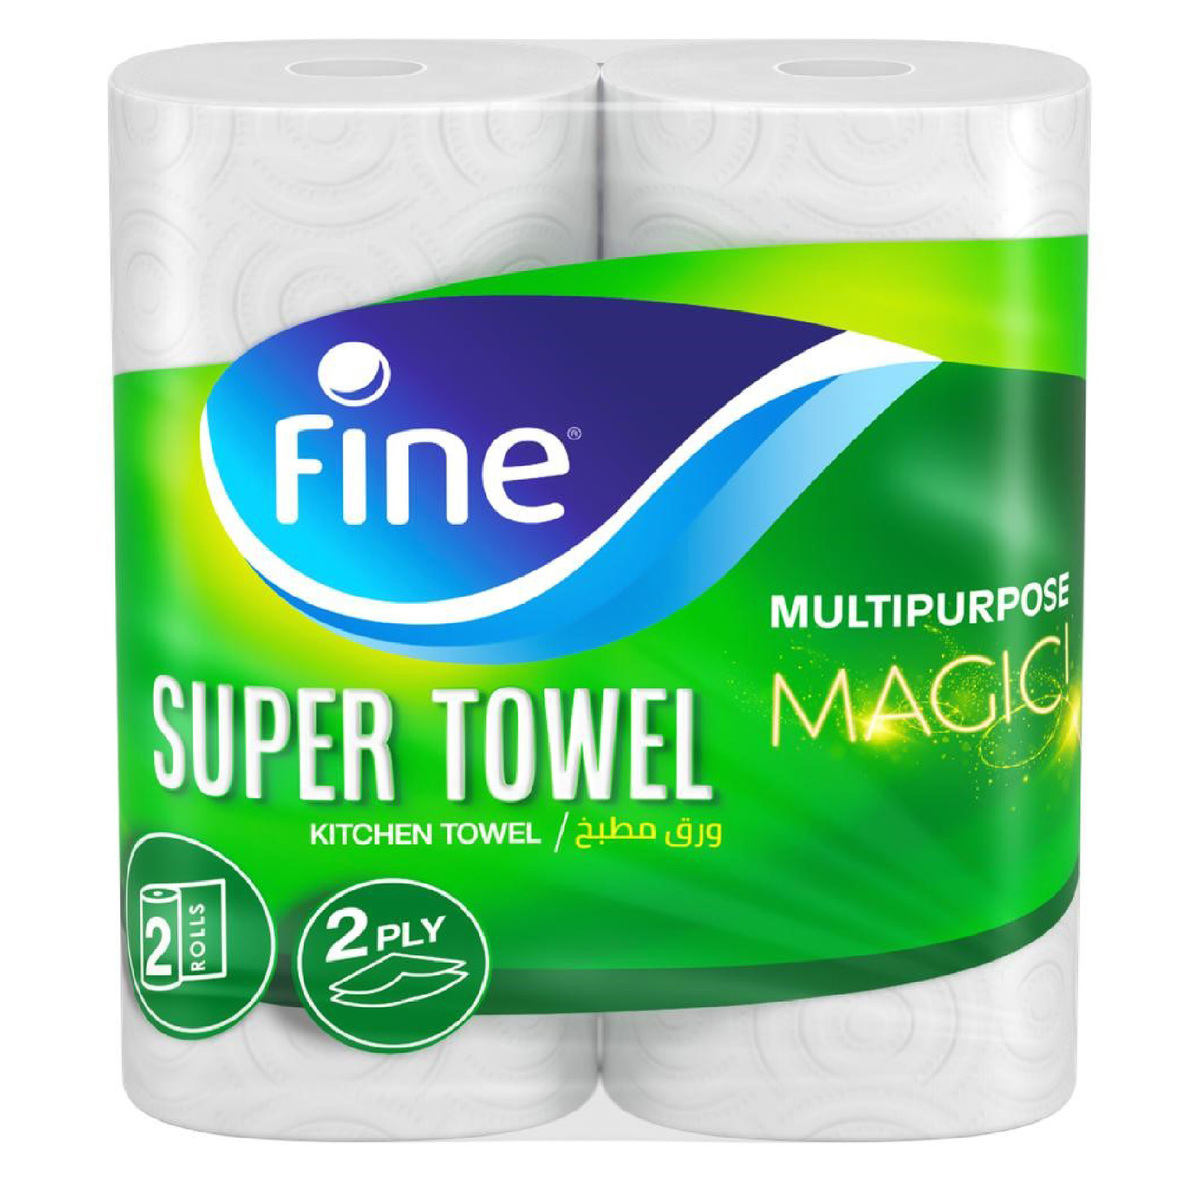 Fine Multipurpose Magic Super Kitchen Towel 2ply 2 x 110 Sheets